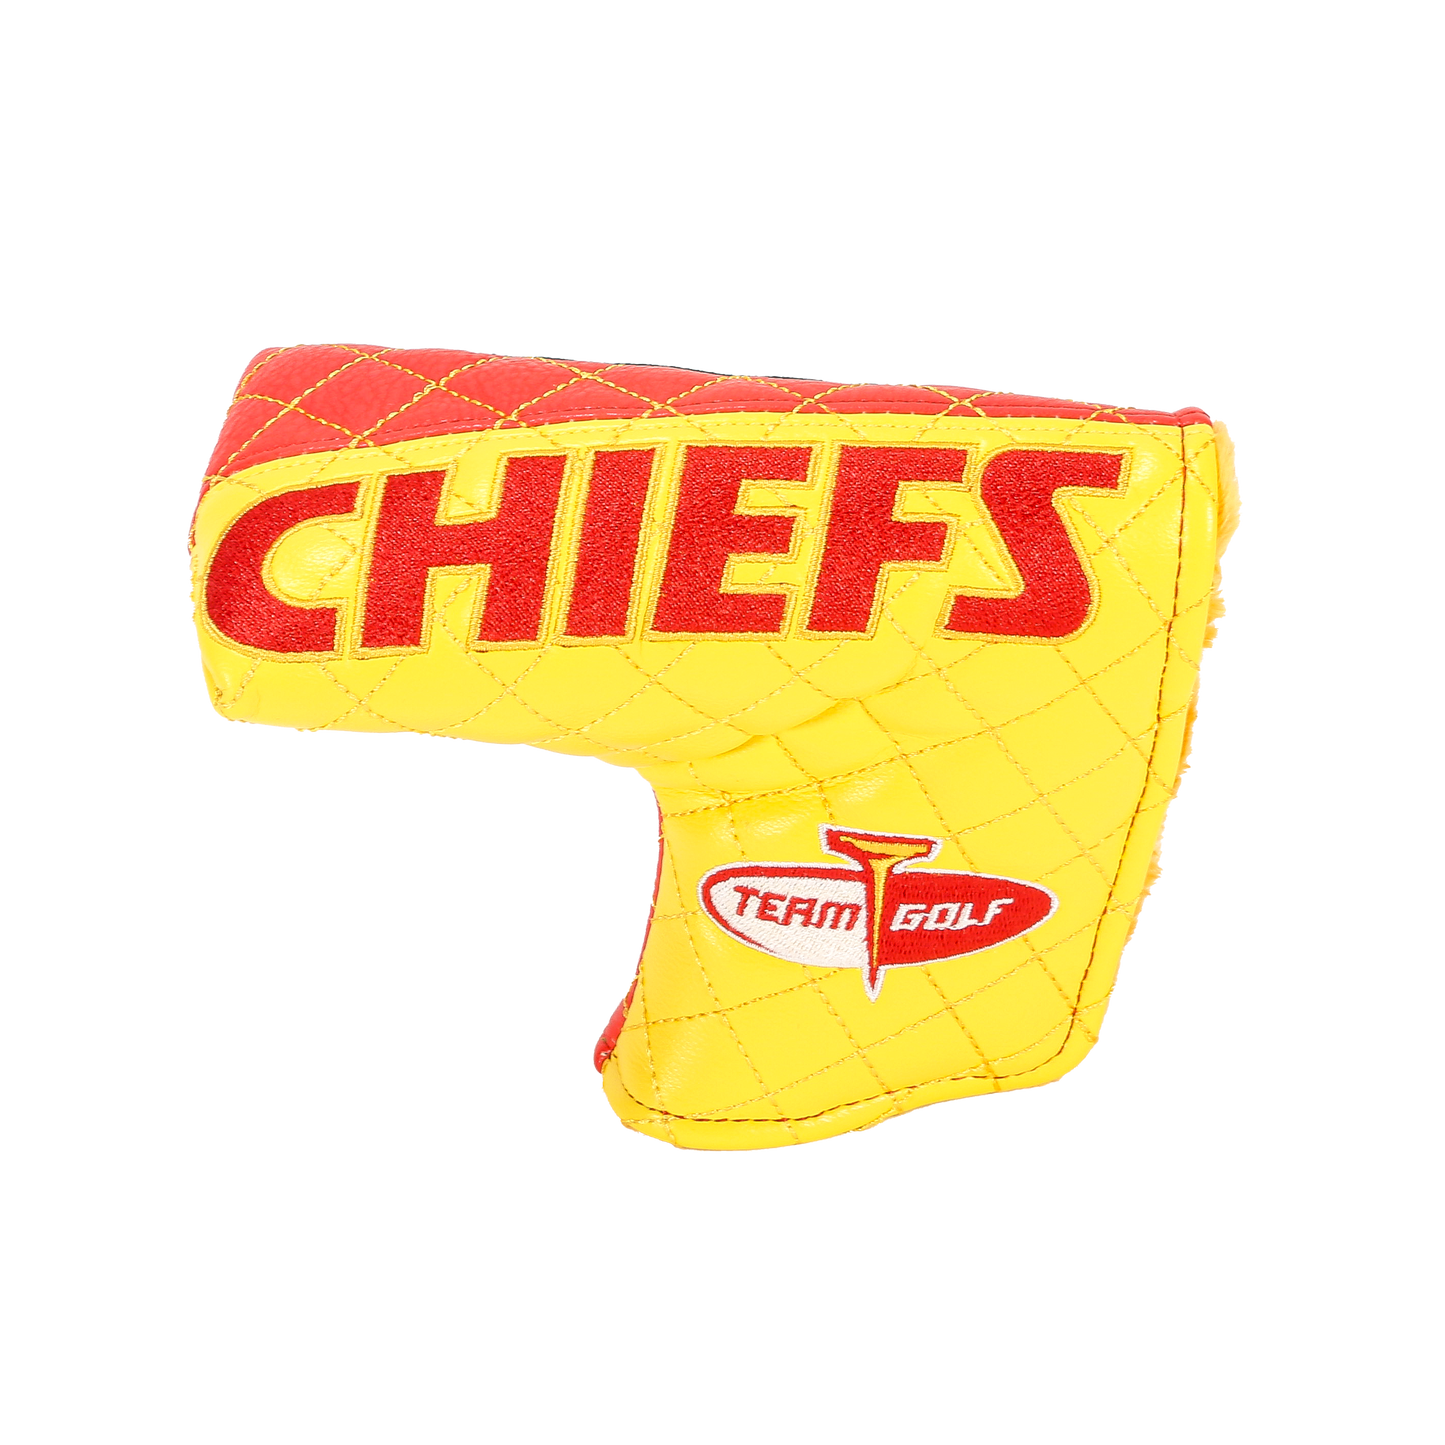 Kansas City "Chiefs" Blade Putter Cover